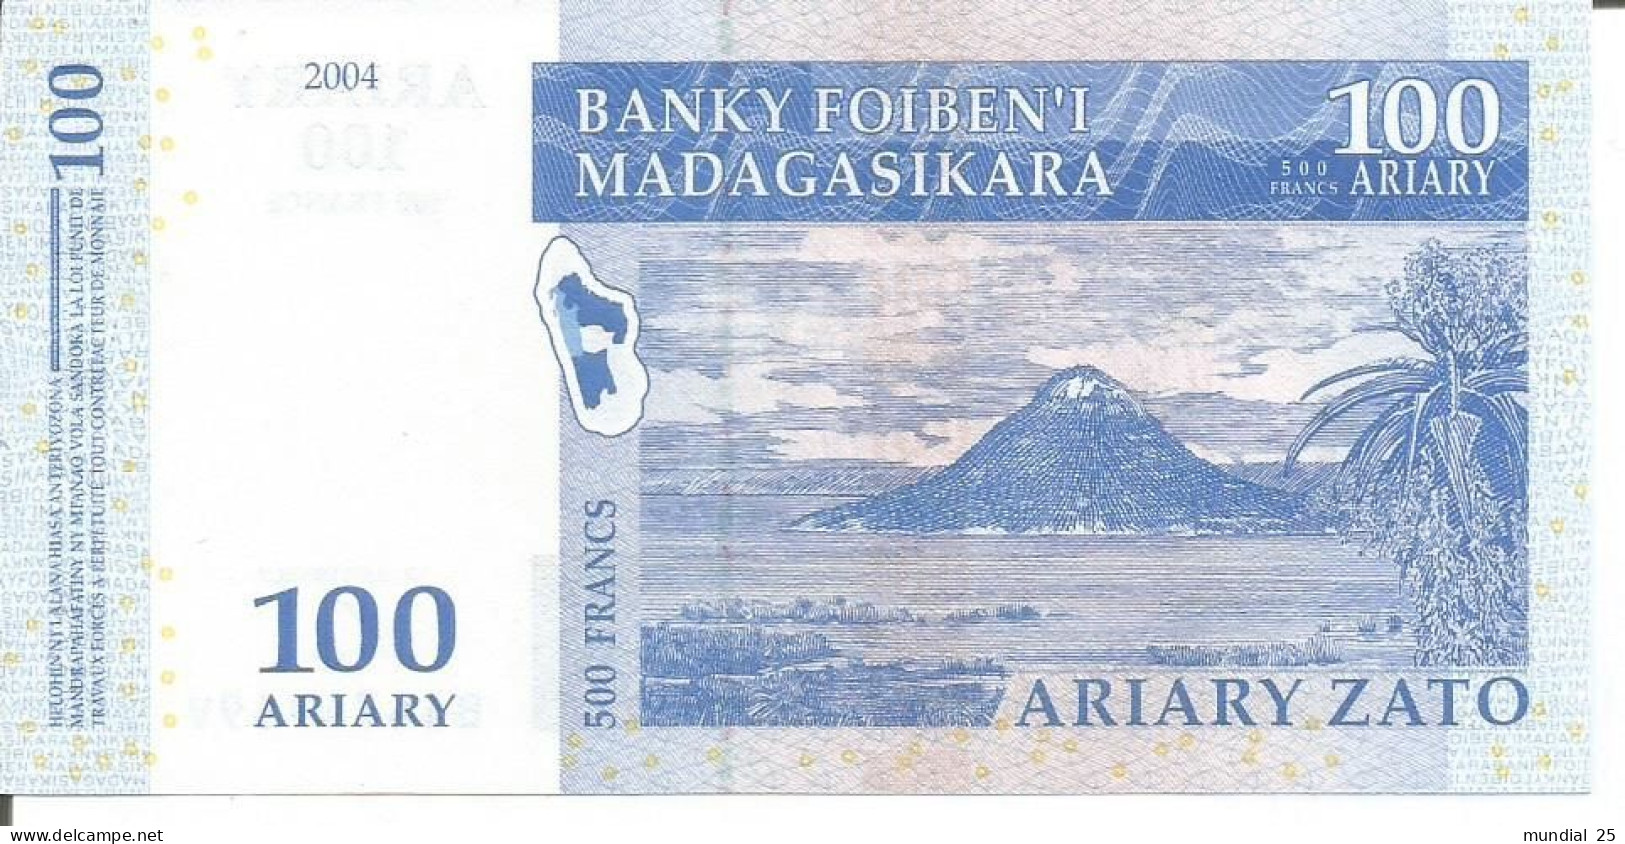 2 MADAGASCAR NOTES 100 ARIARY 2004 - Madagascar